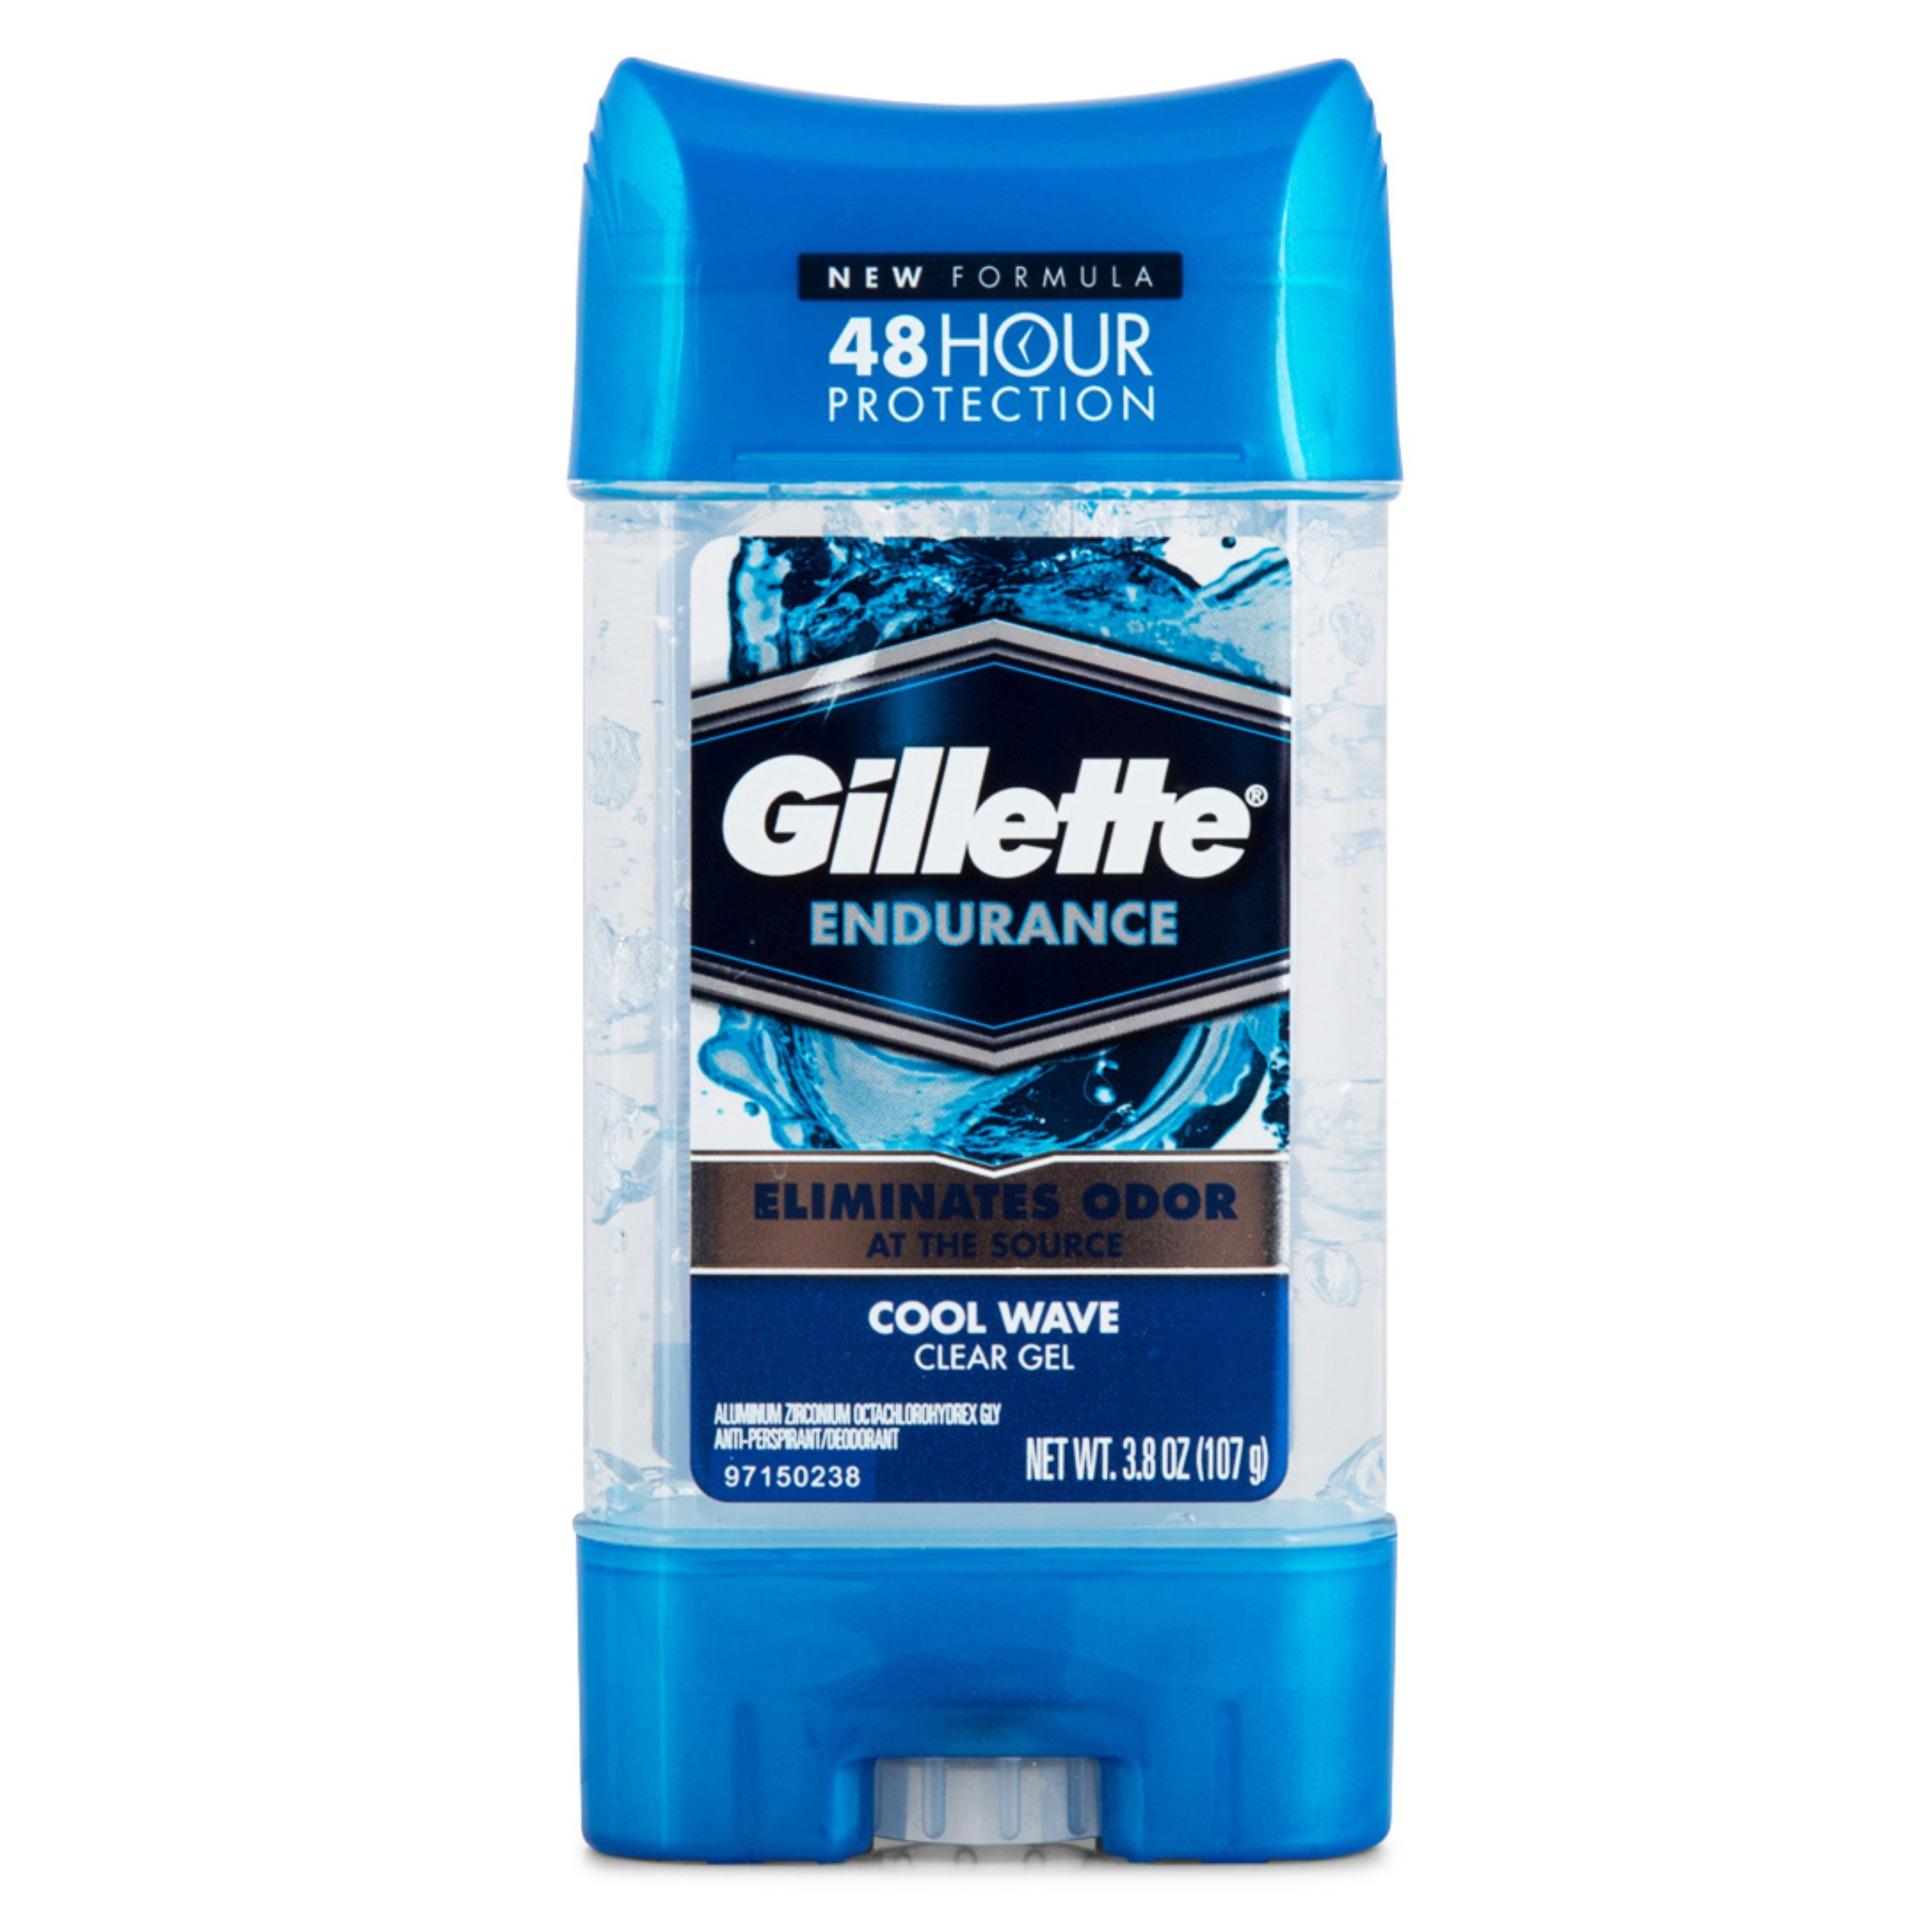 Lăn khử mùi nam Gillette Endurance Clear Gel Cool Wave 107g